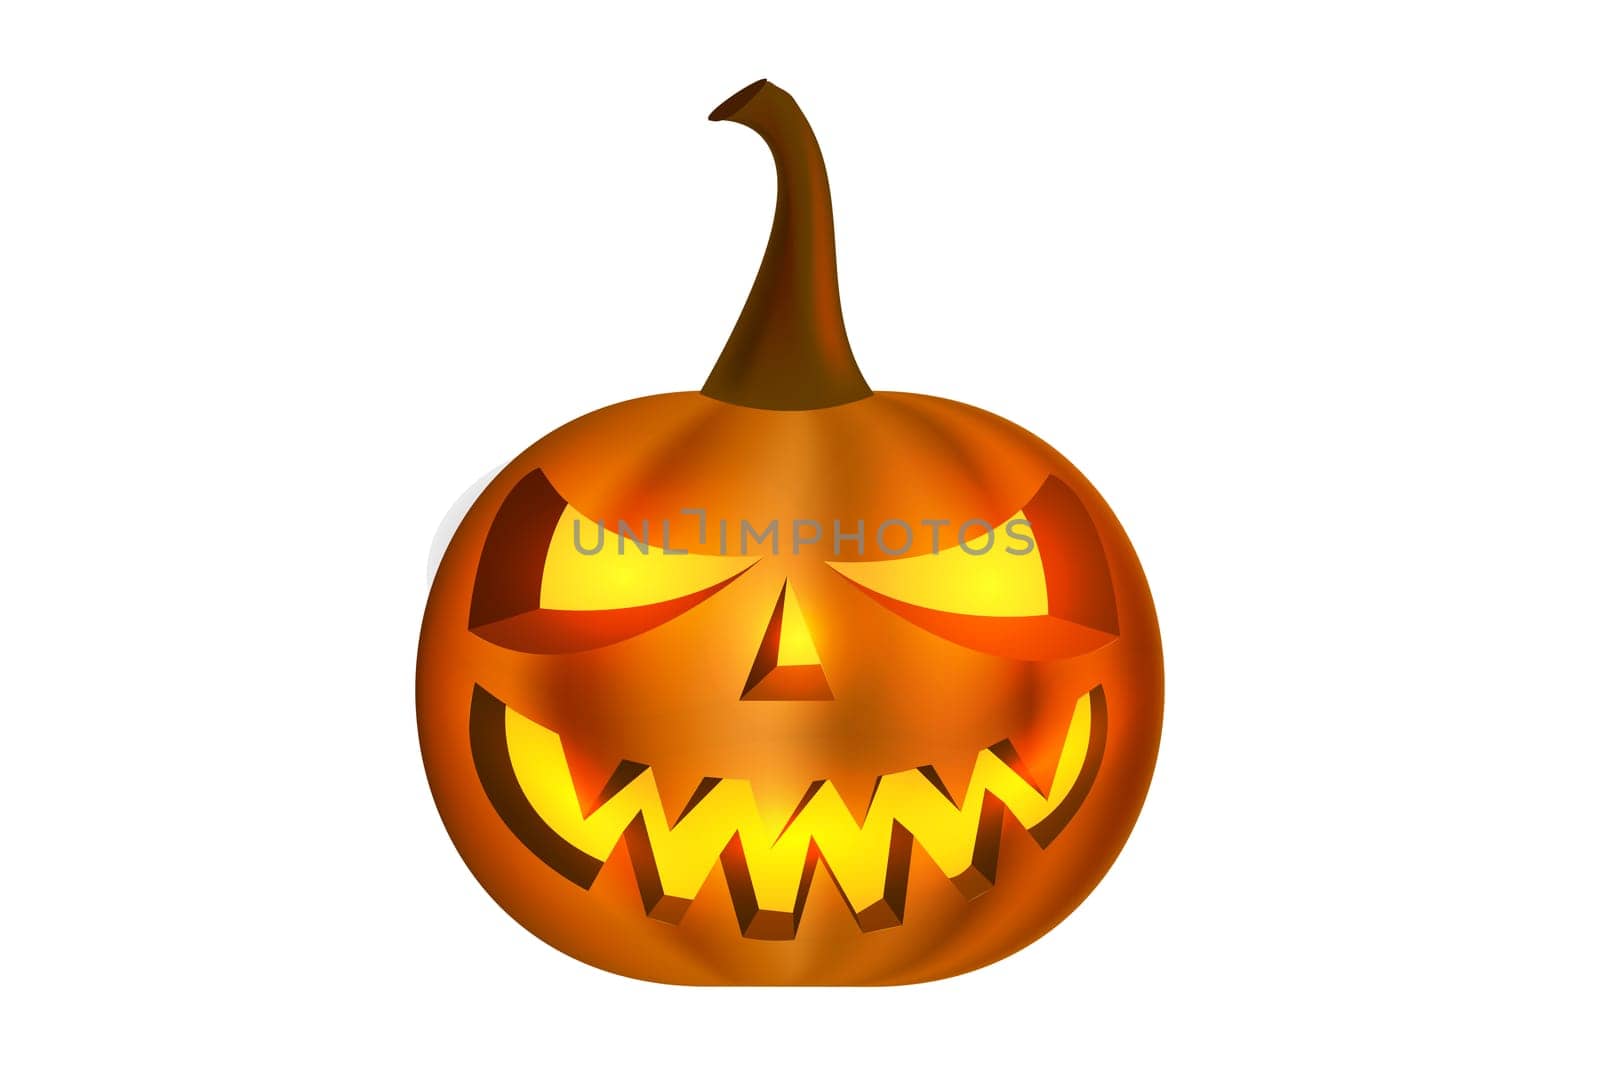 Pumpkin Halloween on white background isolated by sarayut_thaneerat